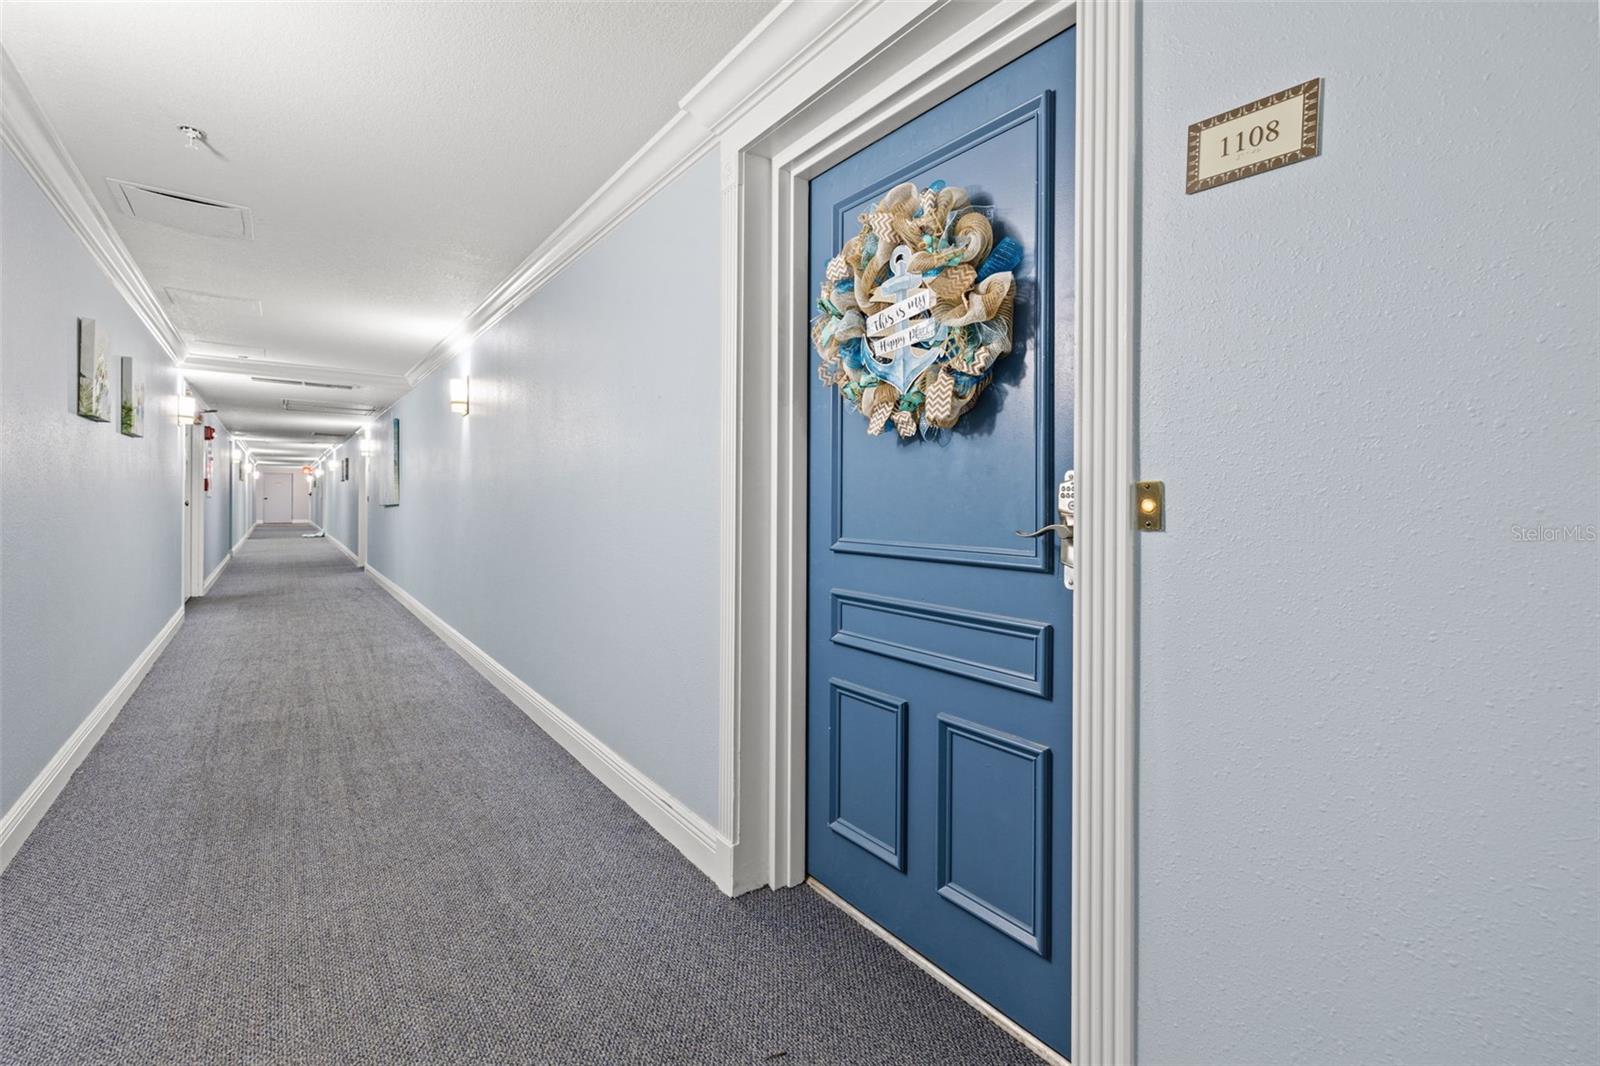 Freshly updated hallways